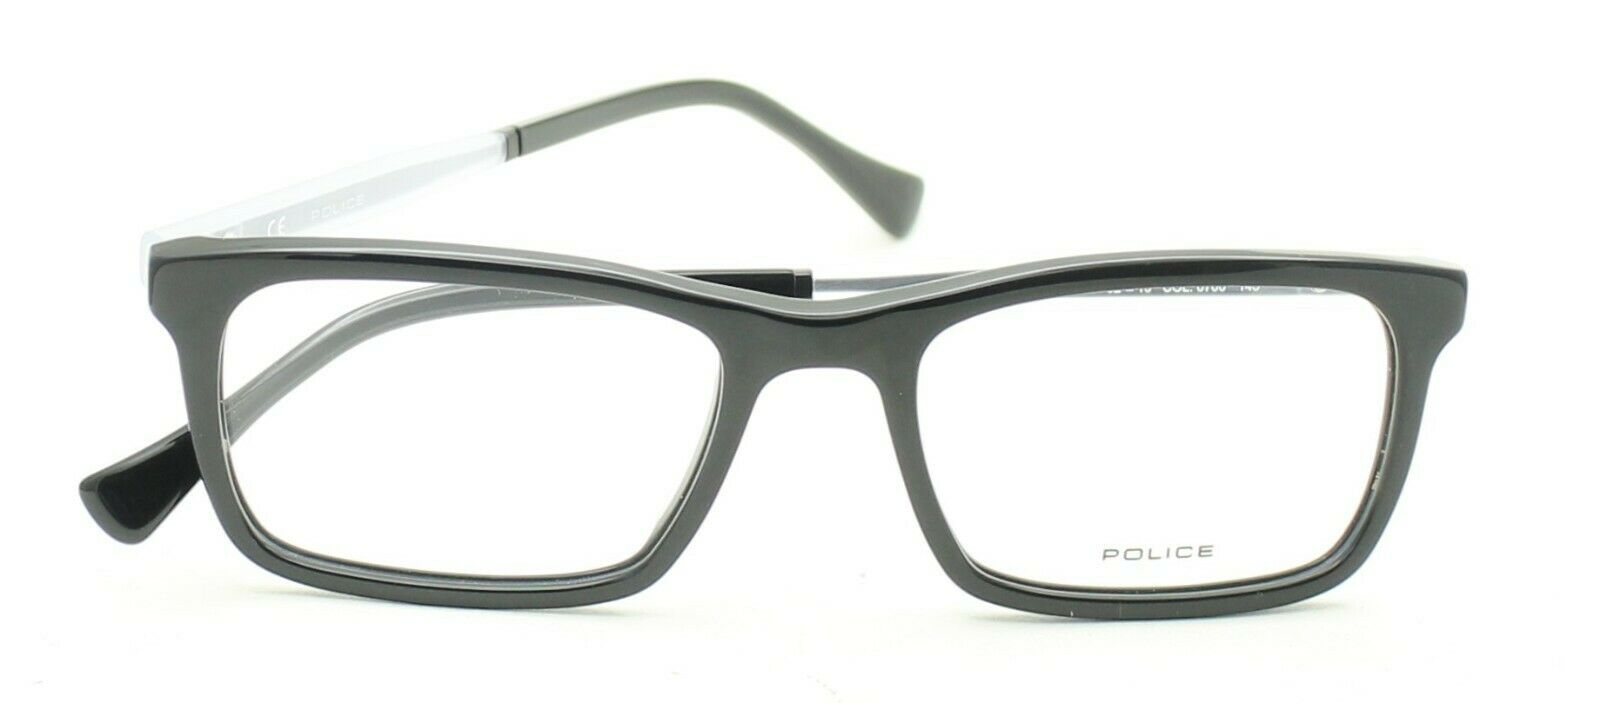 POLICE VICTORY 2 VPL 262N COL. 0700 52mm Eyewear FRAMES Glasses RX Optical - New